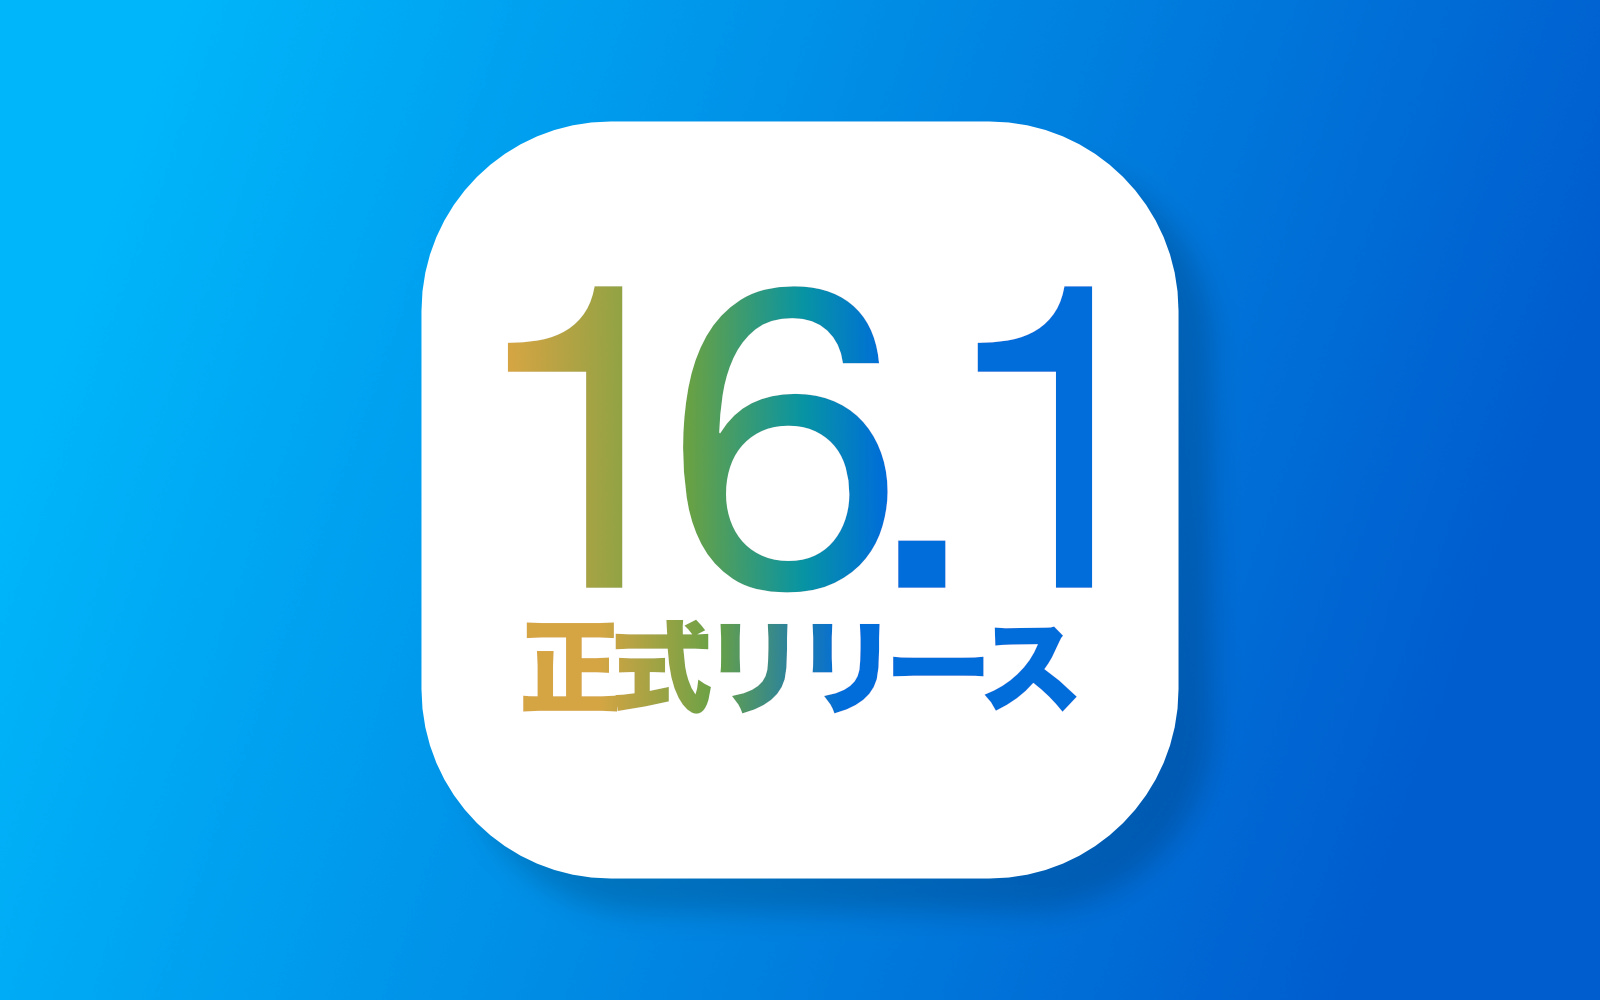 IOS16 1 officila release